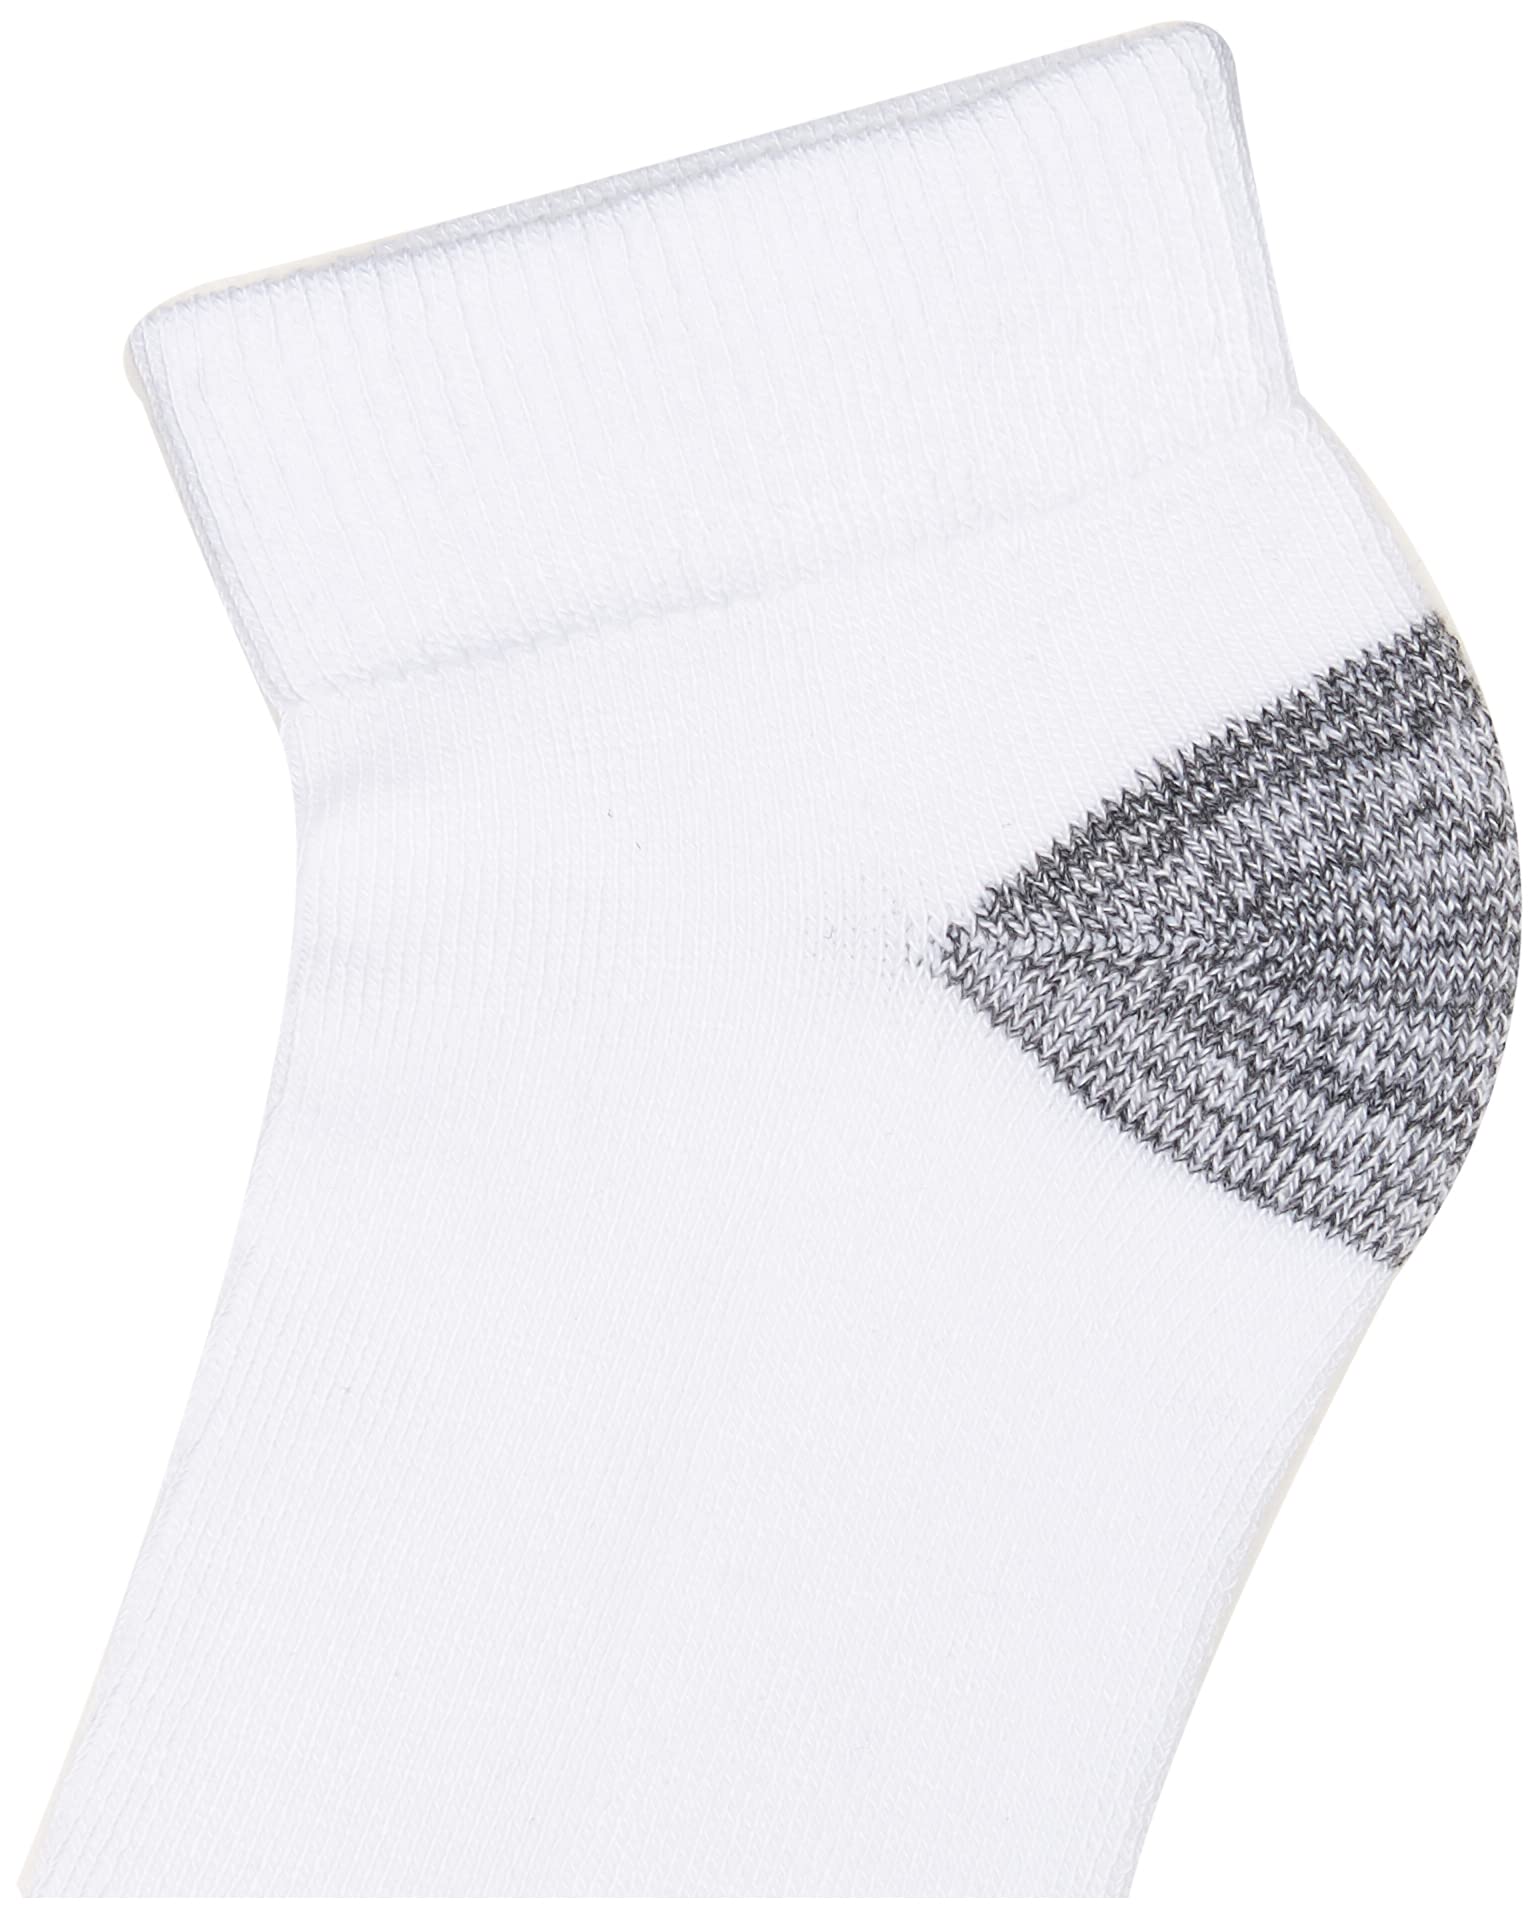 Gildan Men's Polyester Half Cushion Low Cut Socks, 12-pack